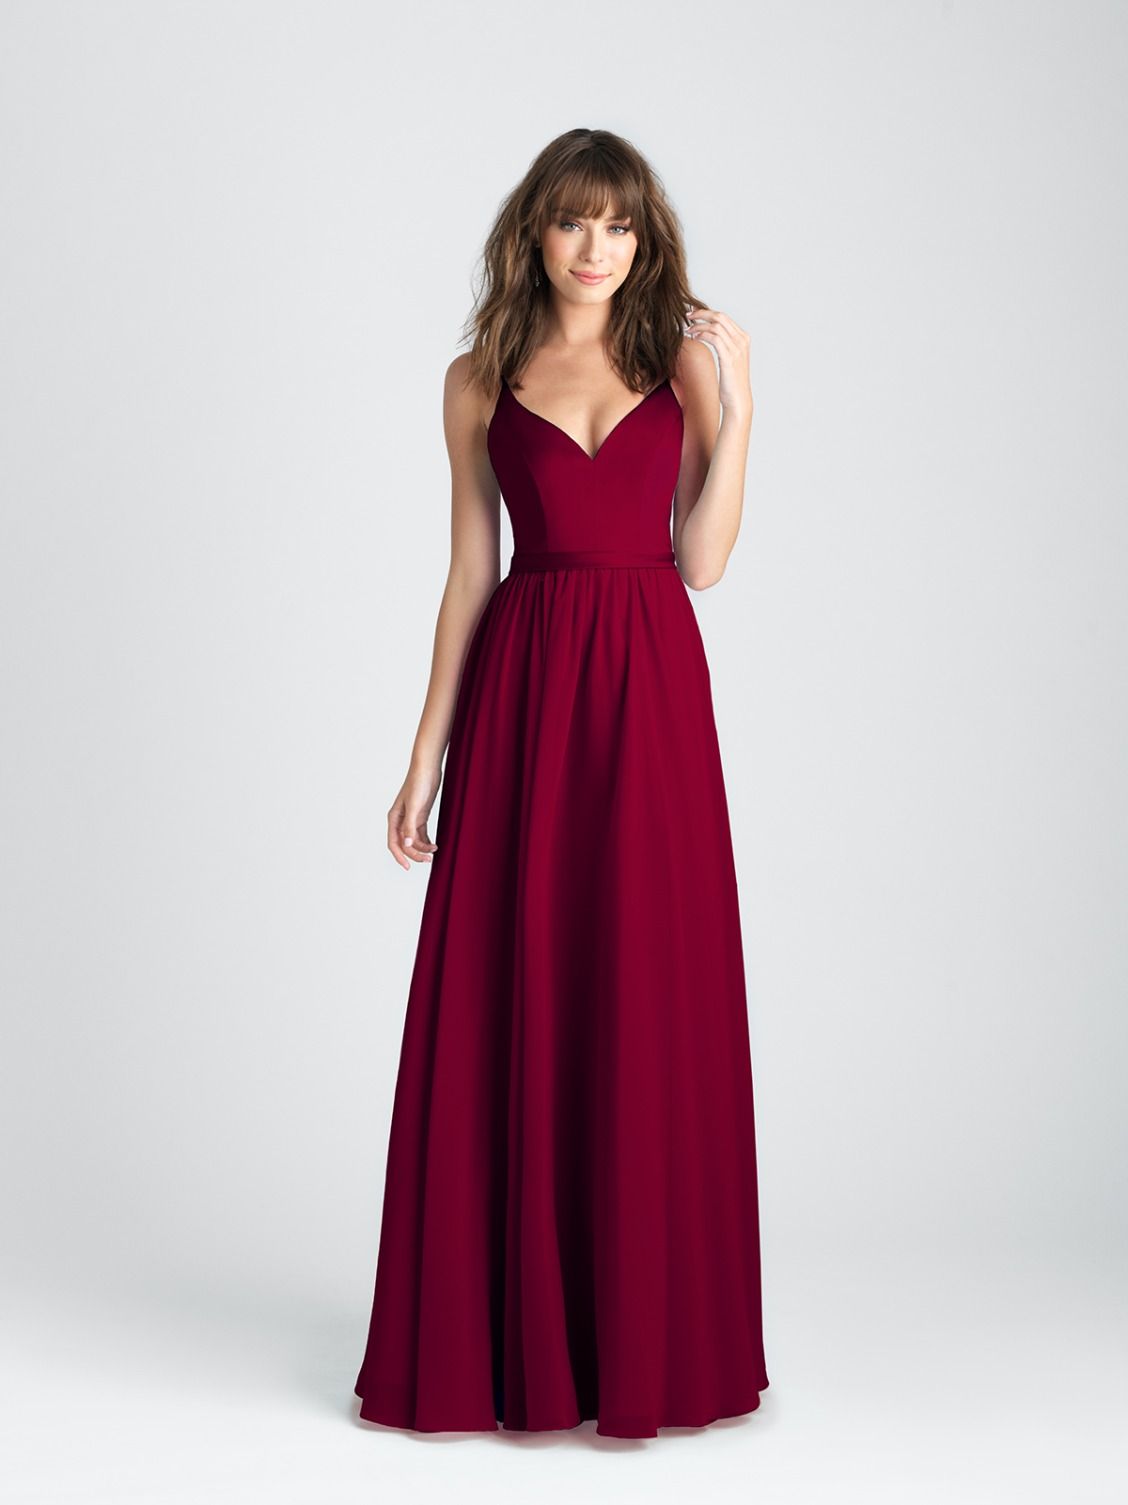 Burgundy Prom Dresses Cheap 2021